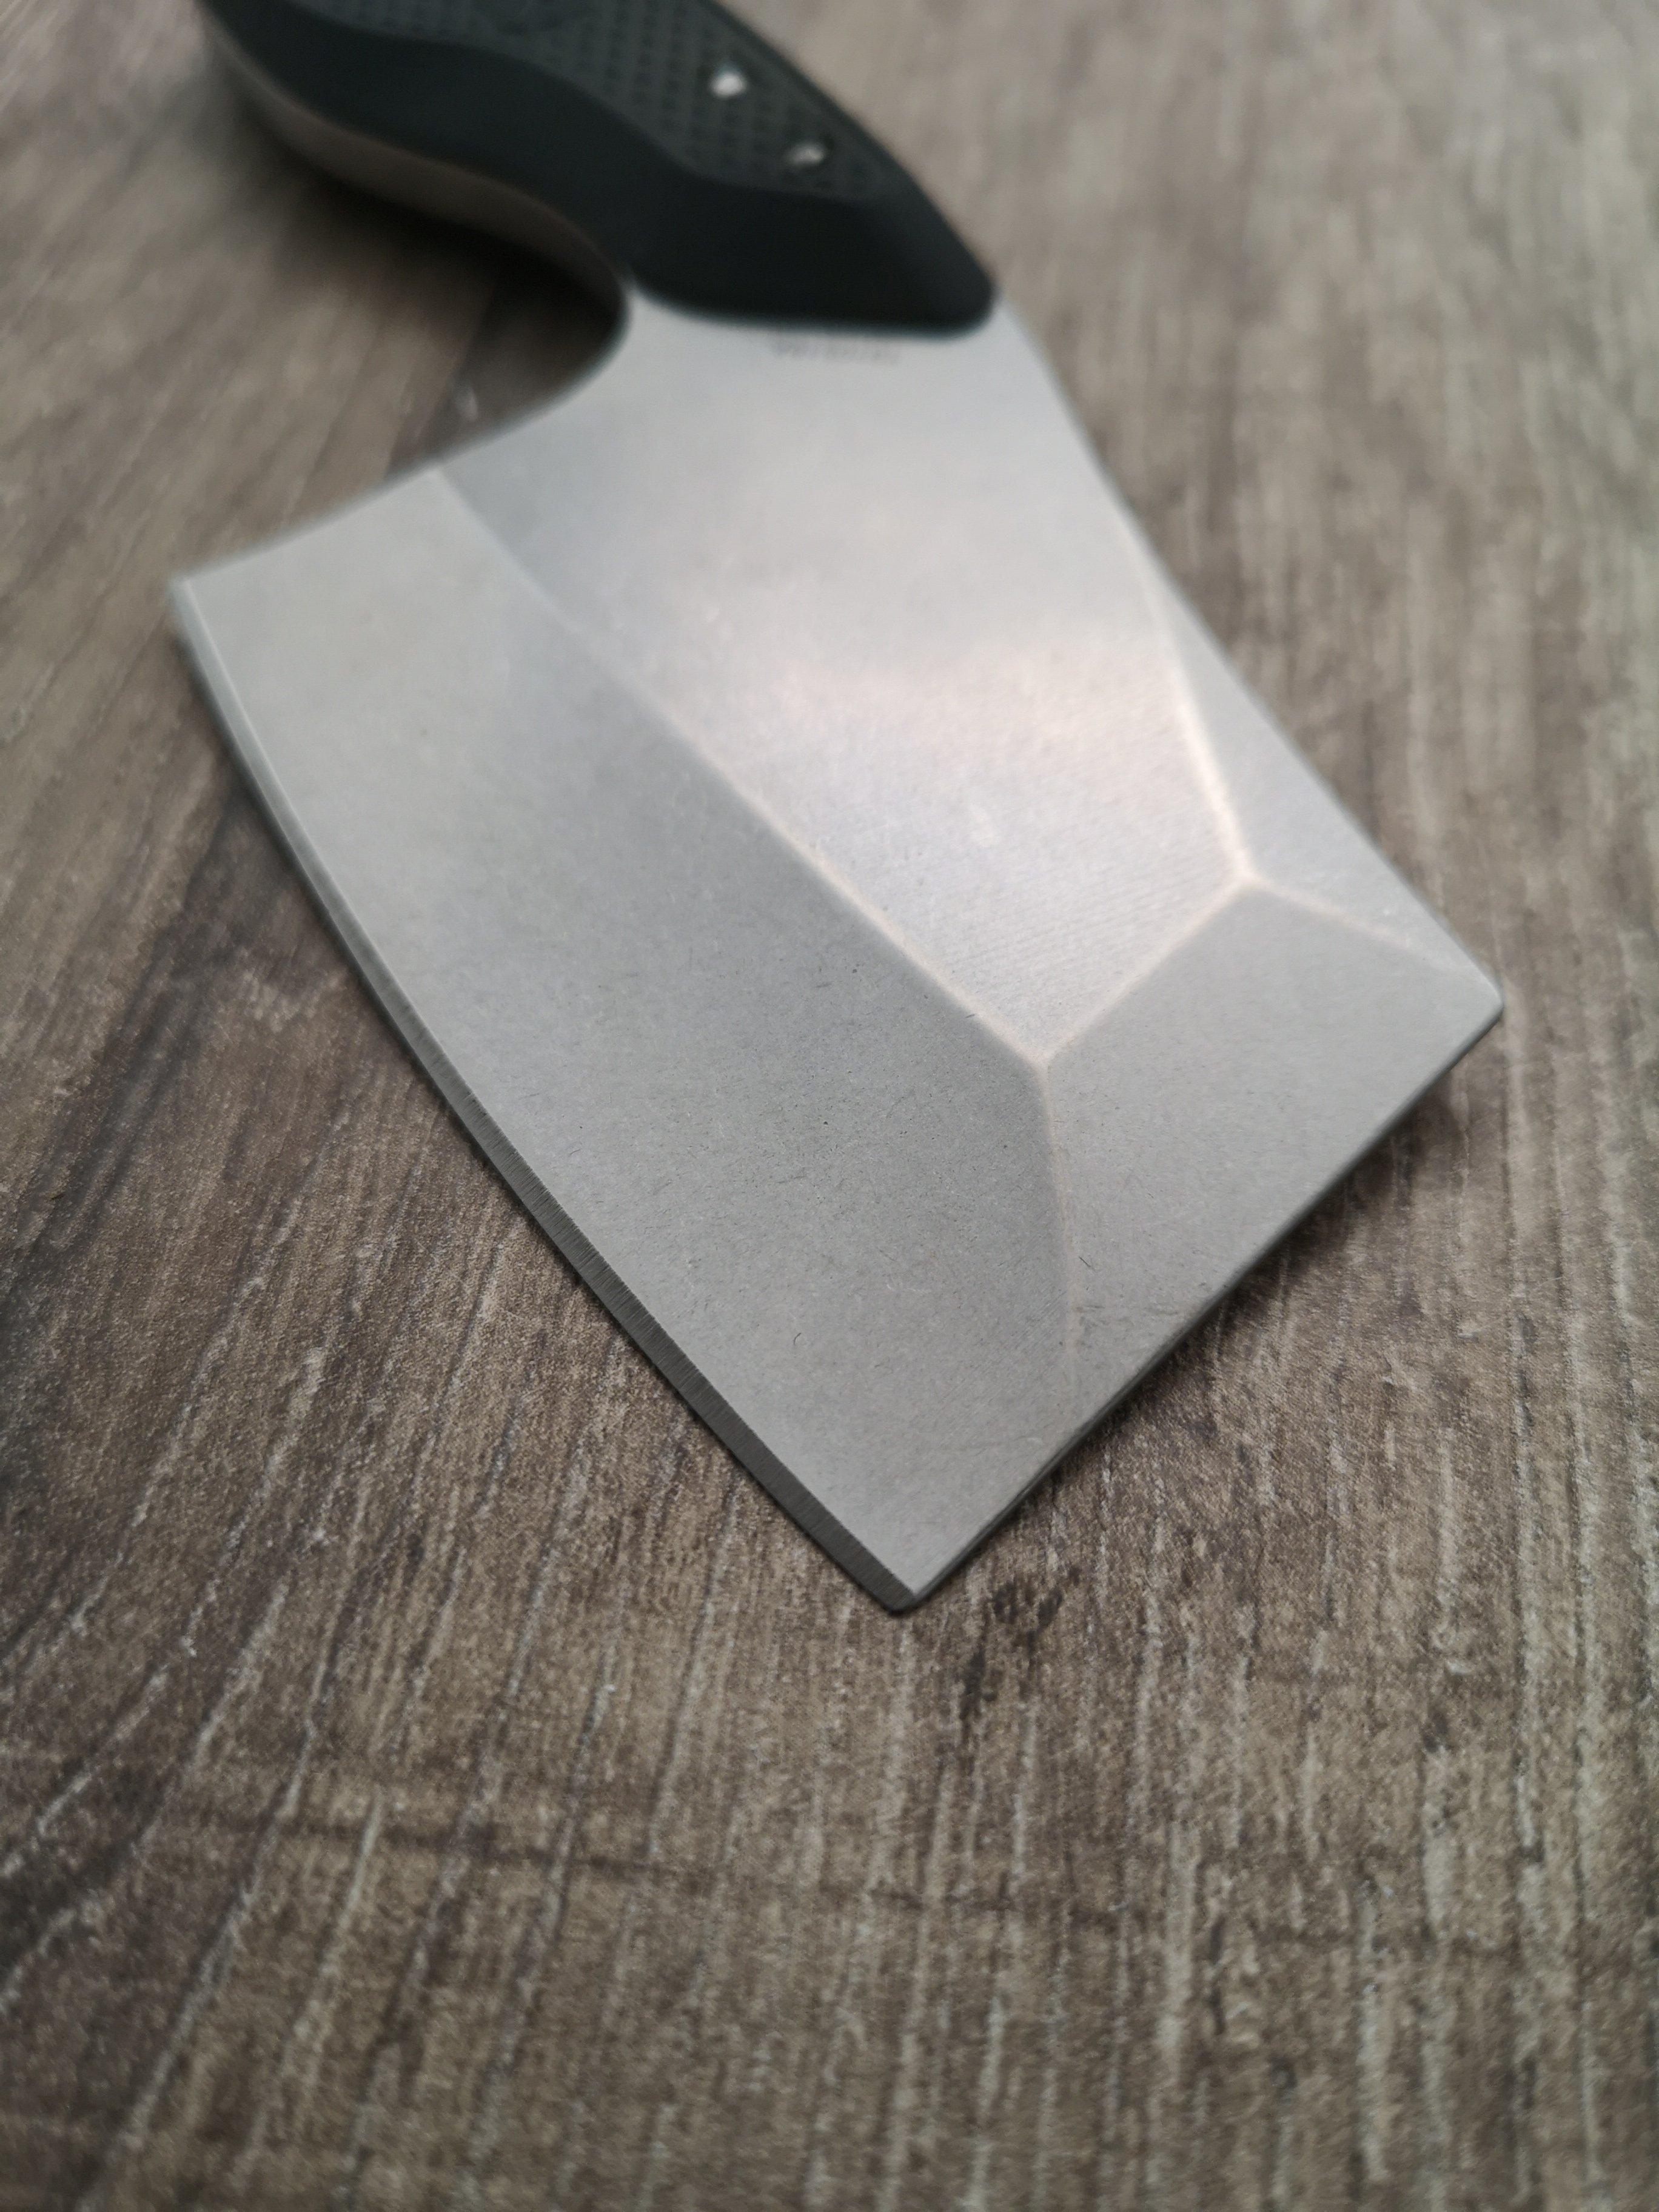 Gerber Tri-Tip Mini Cleaver Black Stonewashed 30-001665 fixed knife ...